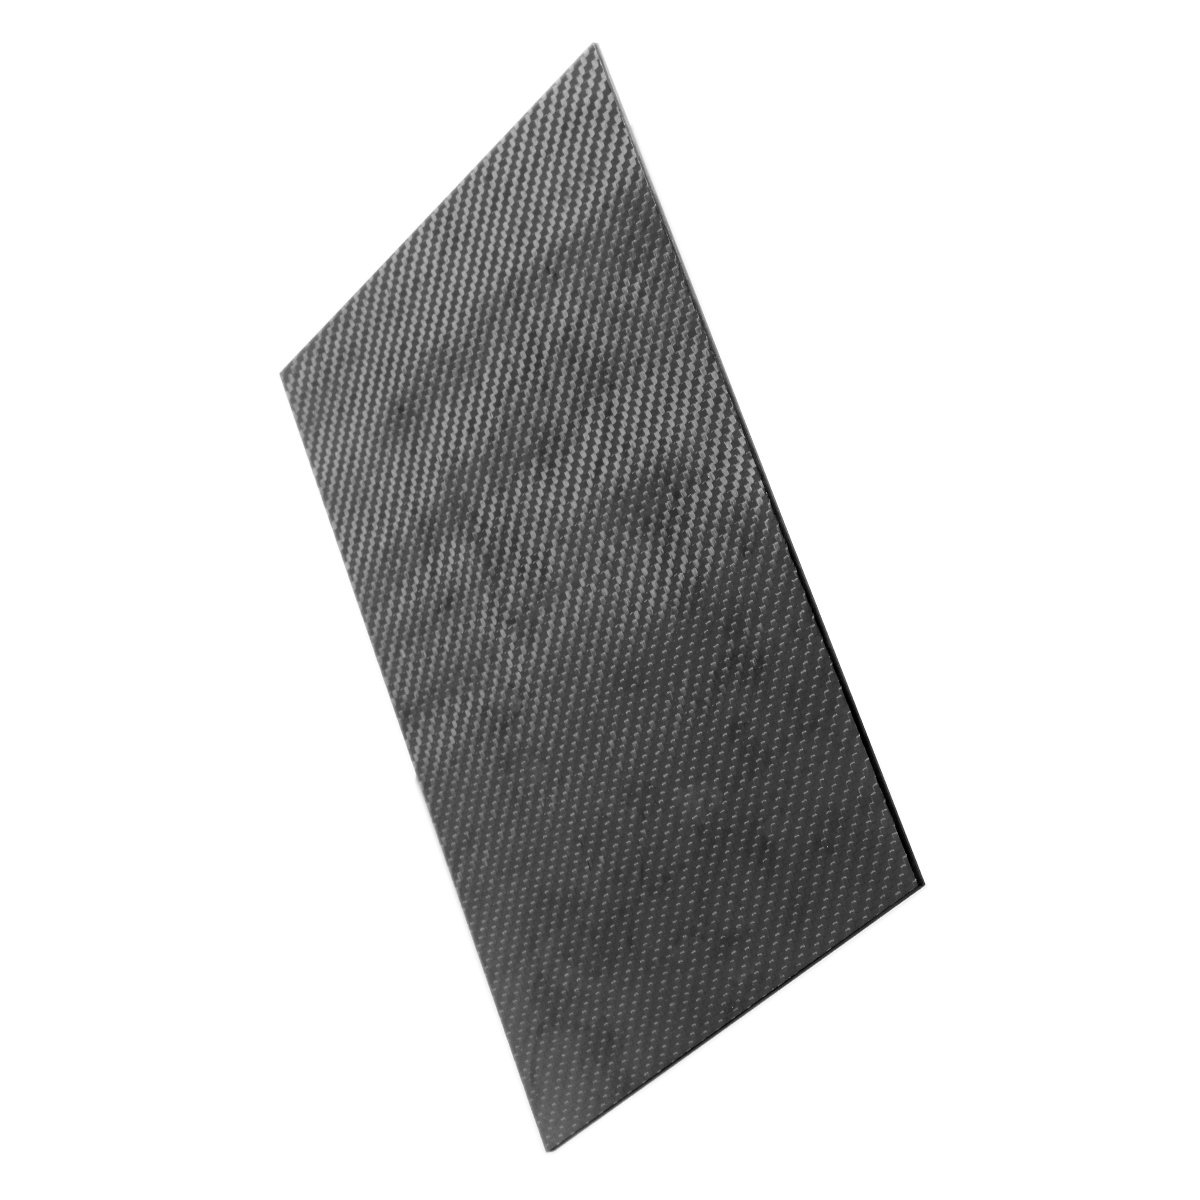 200x250x05-5mm-3K-Black-Twill-Weave-Carbon-Fiber-Plate-Sheet-Glossy-Carbon-Fiber-Board-Panel-High-Co-1483989-2